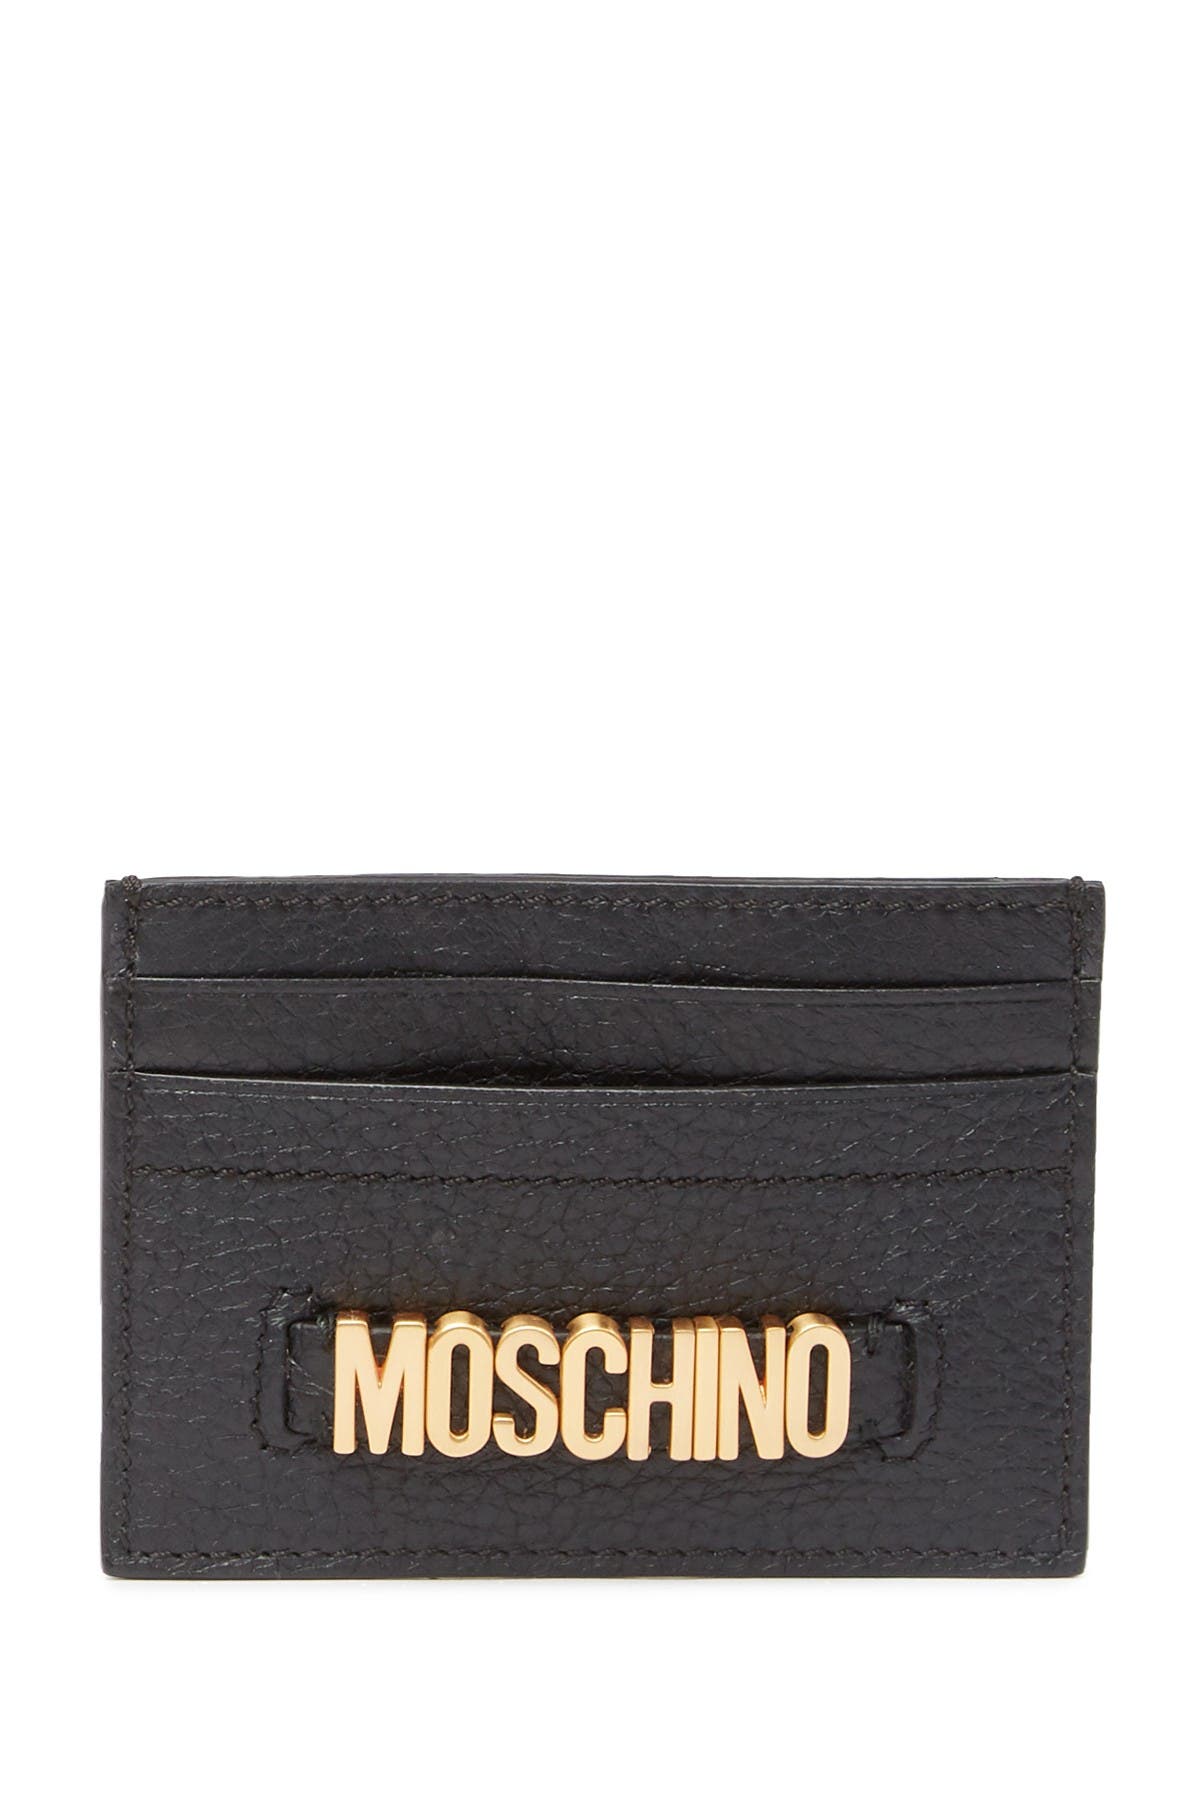 moschino card case